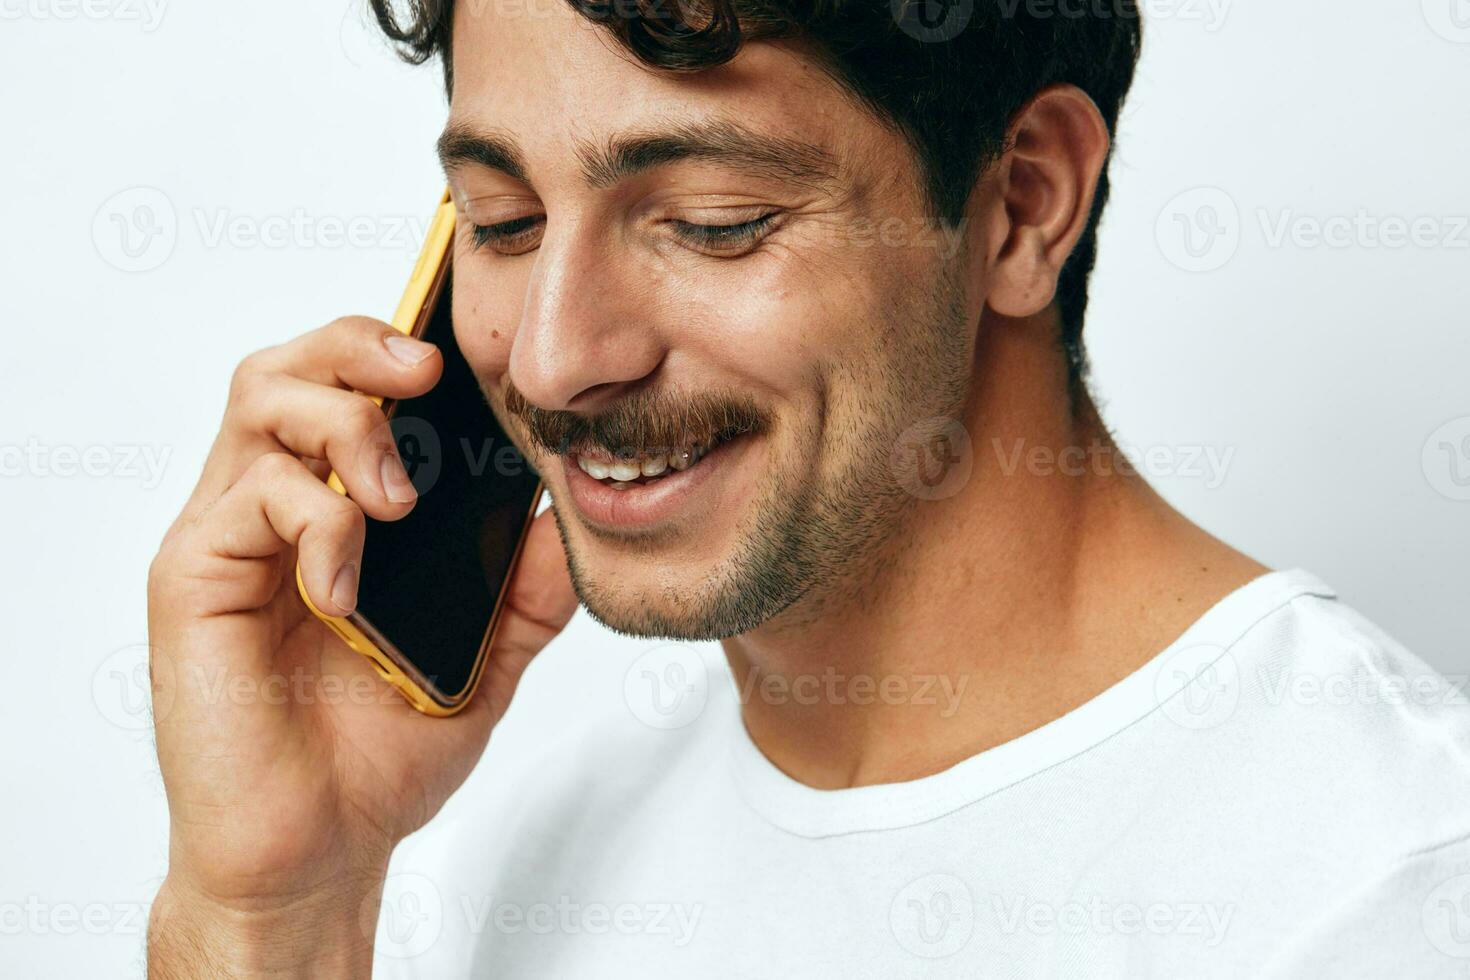 blanco hombre teléfono mensaje modelo hipster camiseta en línea retrato estilo de vida tecnología foto